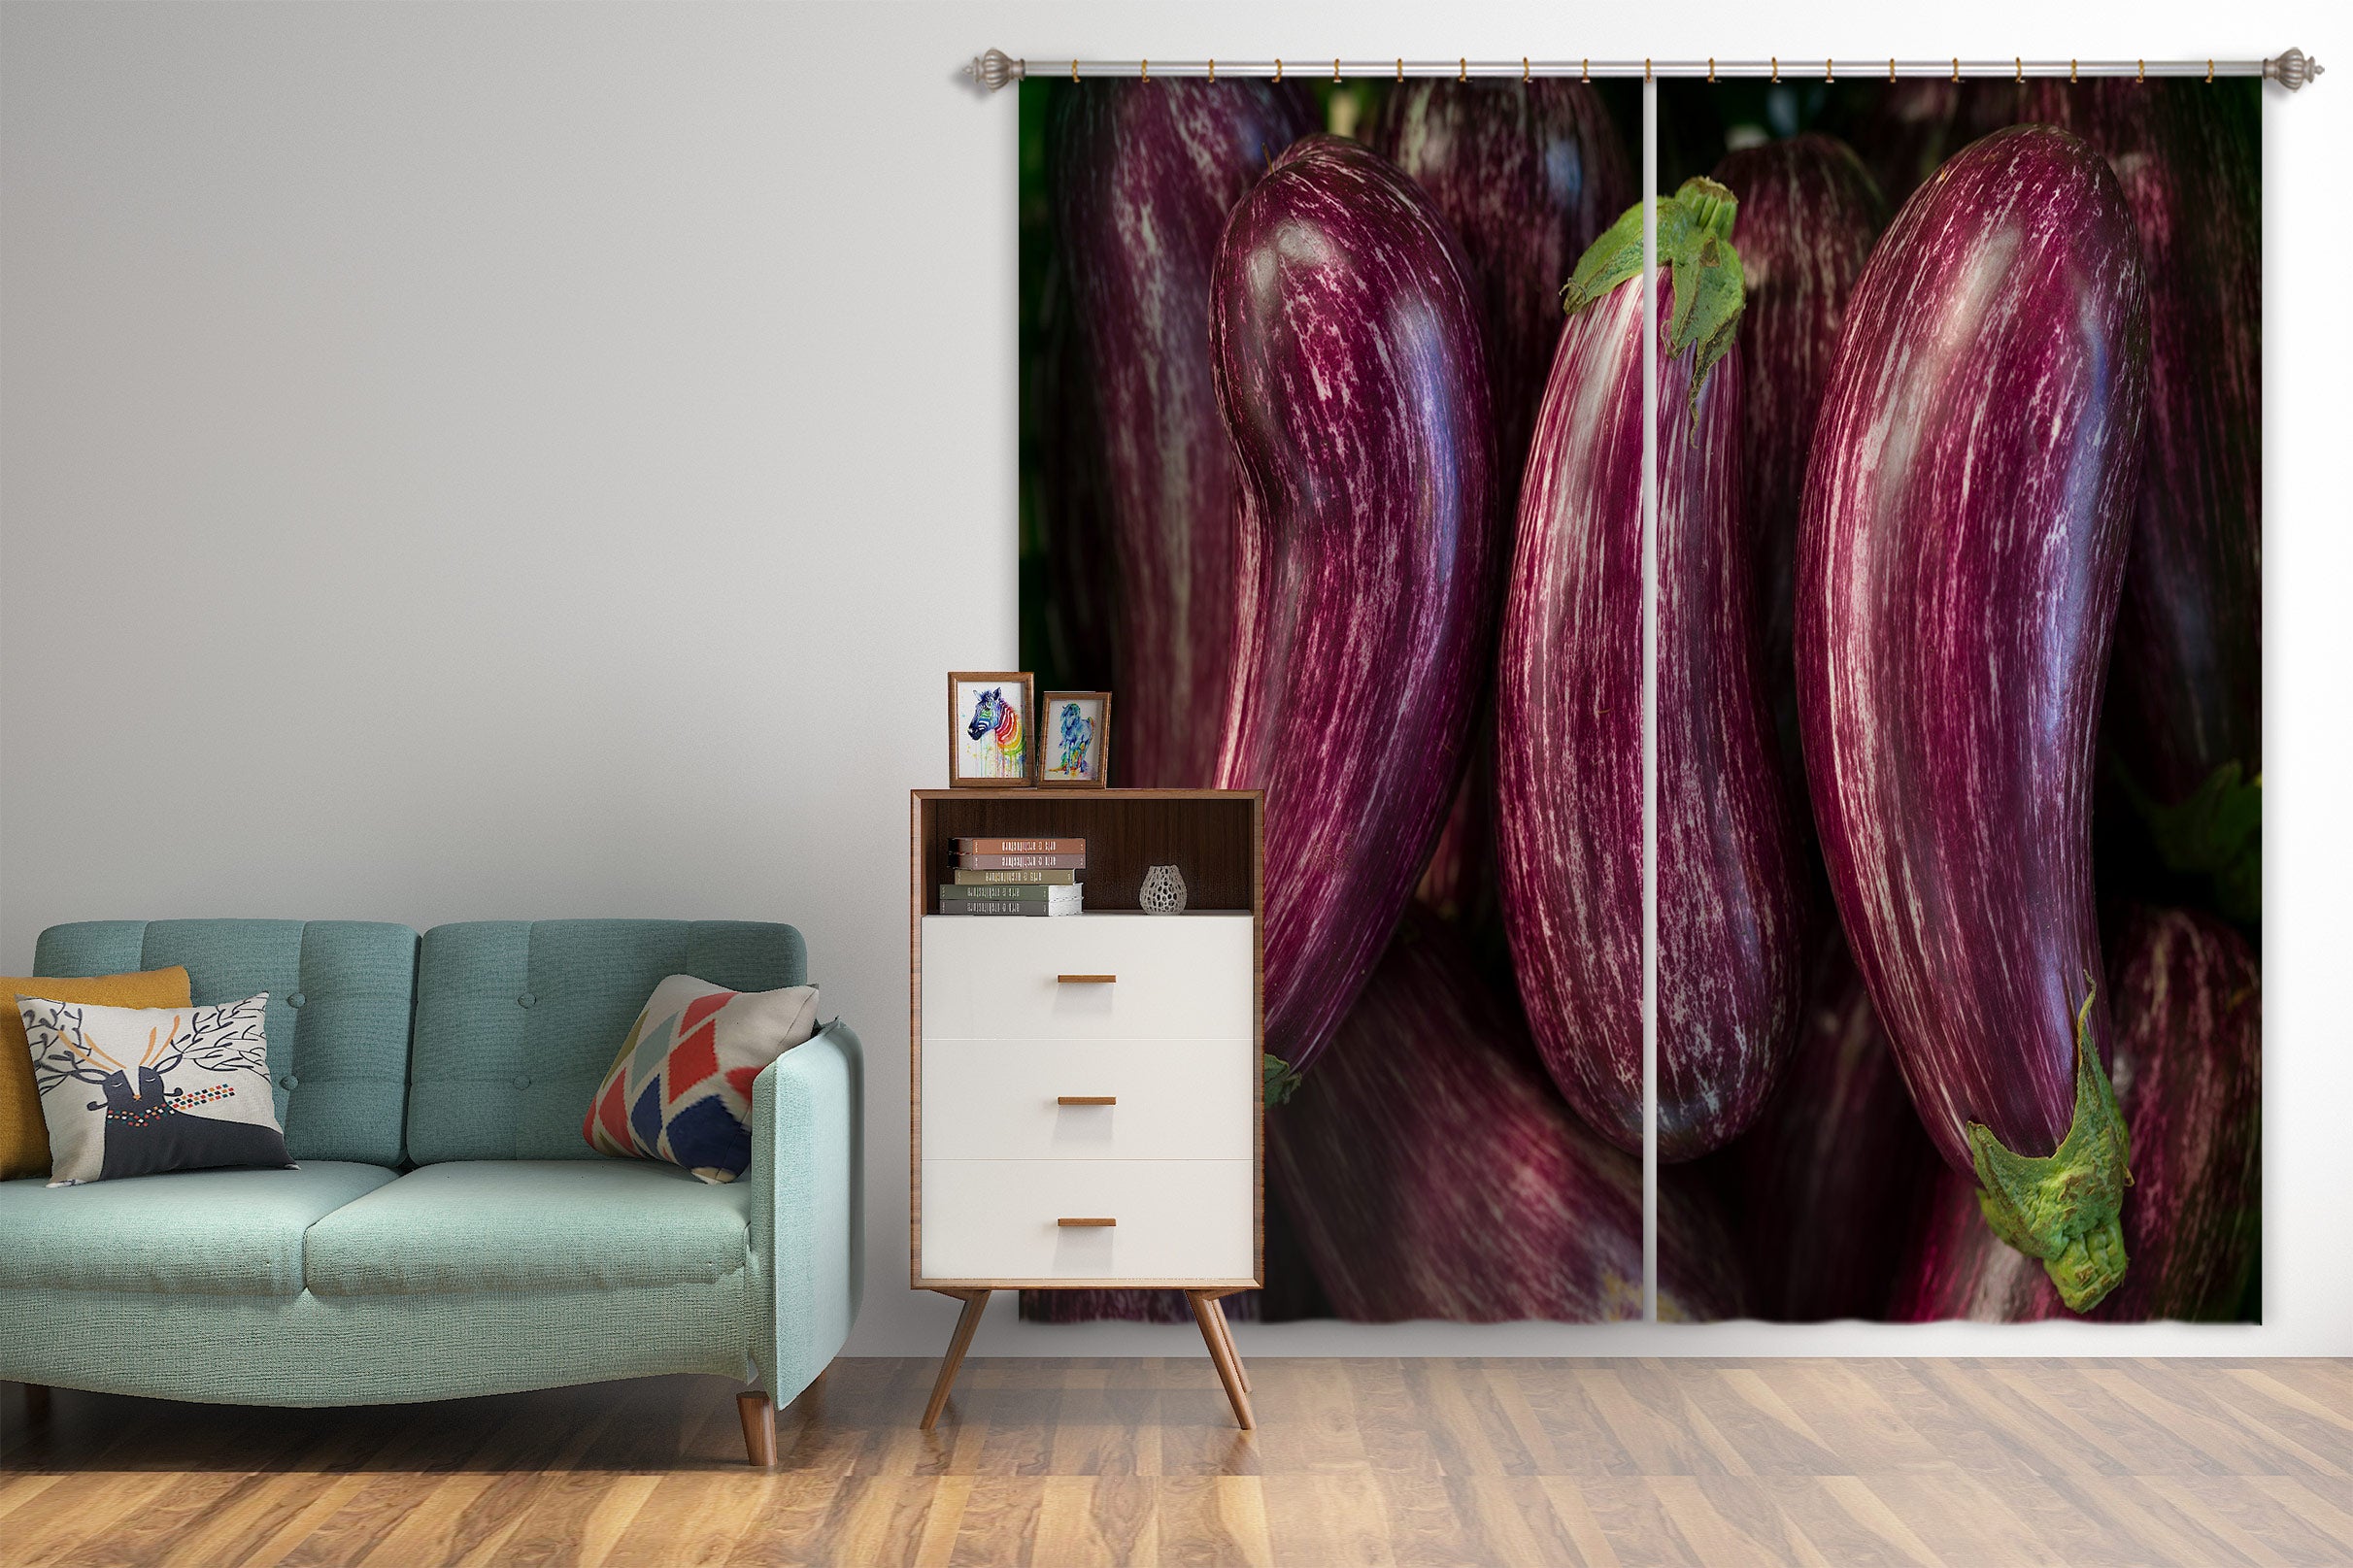 3D Vegetable Eggplant 6558 Assaf Frank Curtain Curtains Drapes